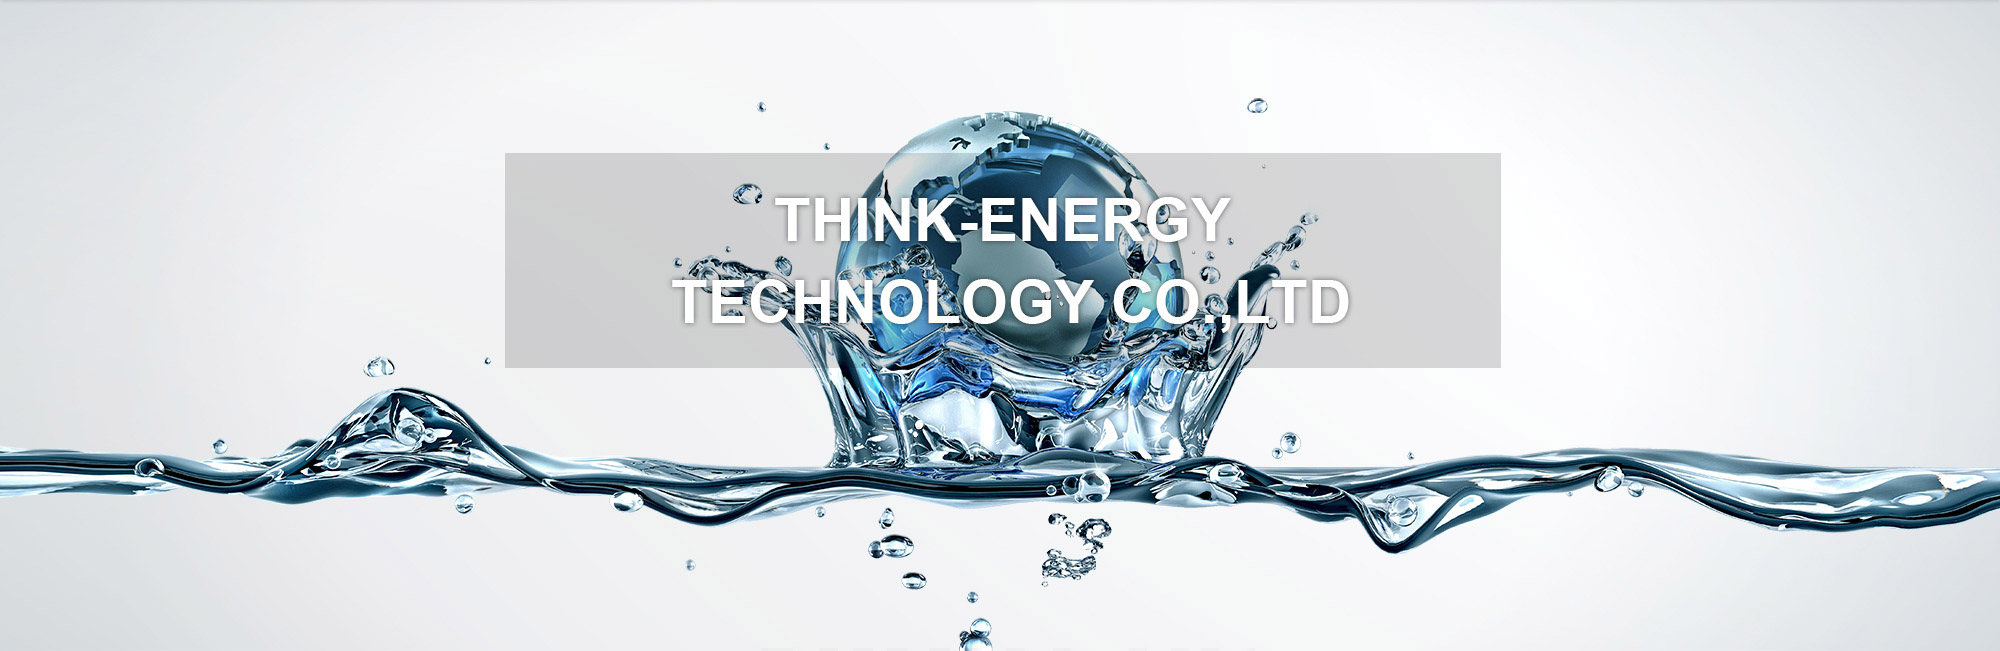 Think-Energy Technology Co.,Ltd